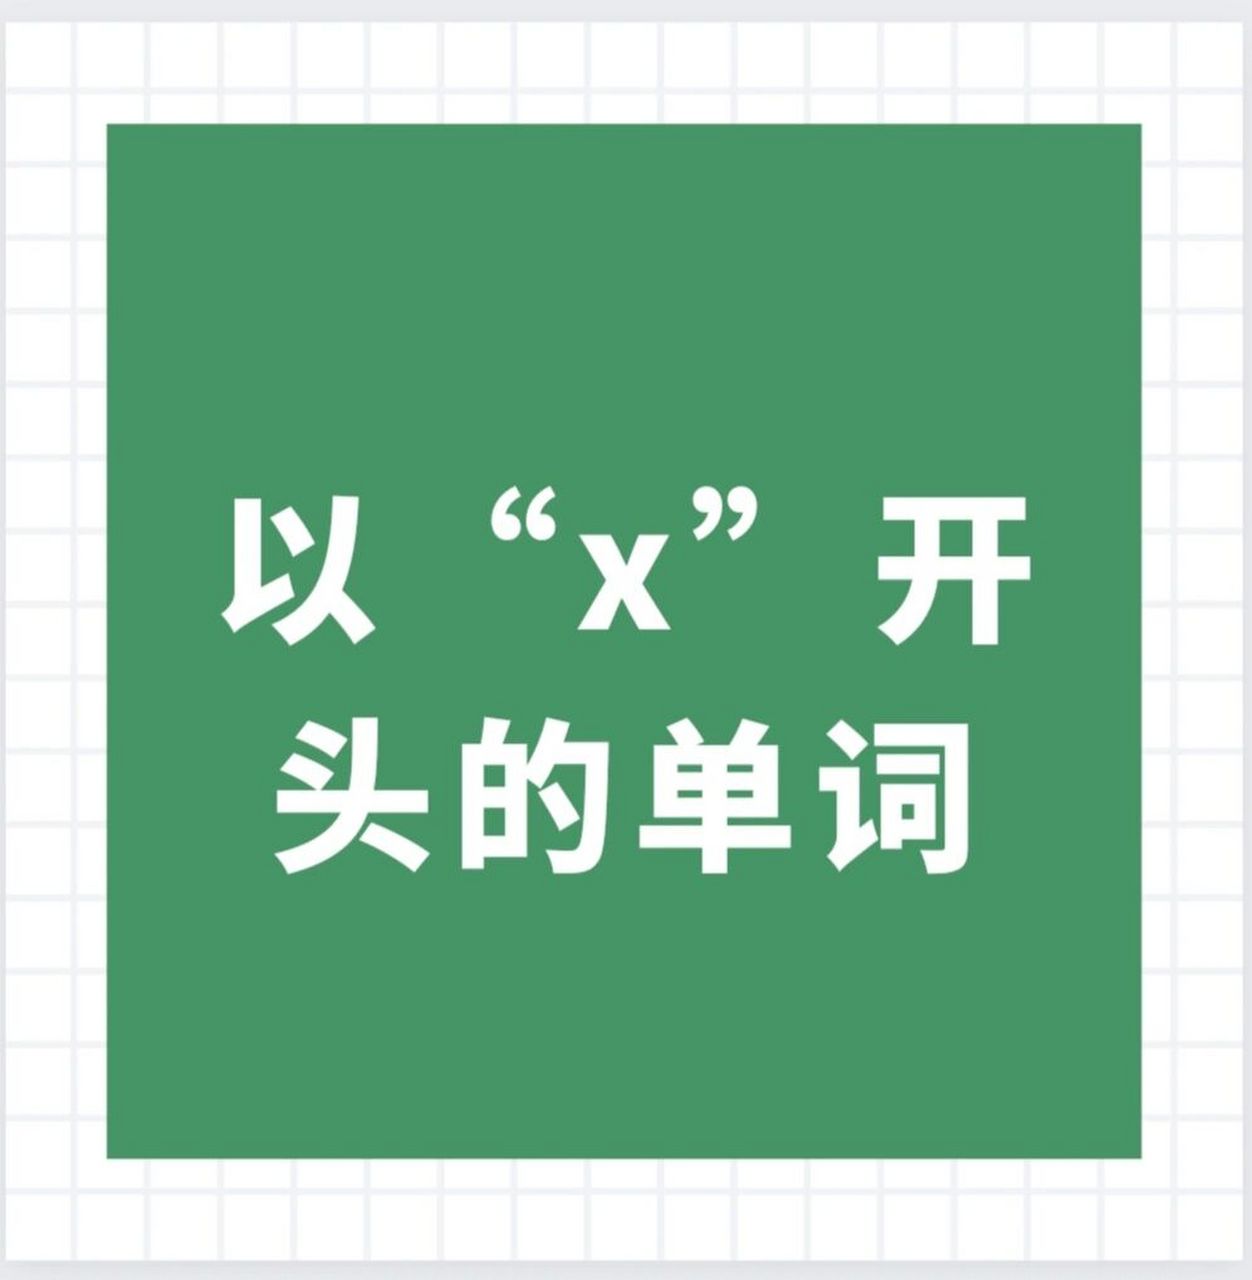 x开头的单词 英文图片